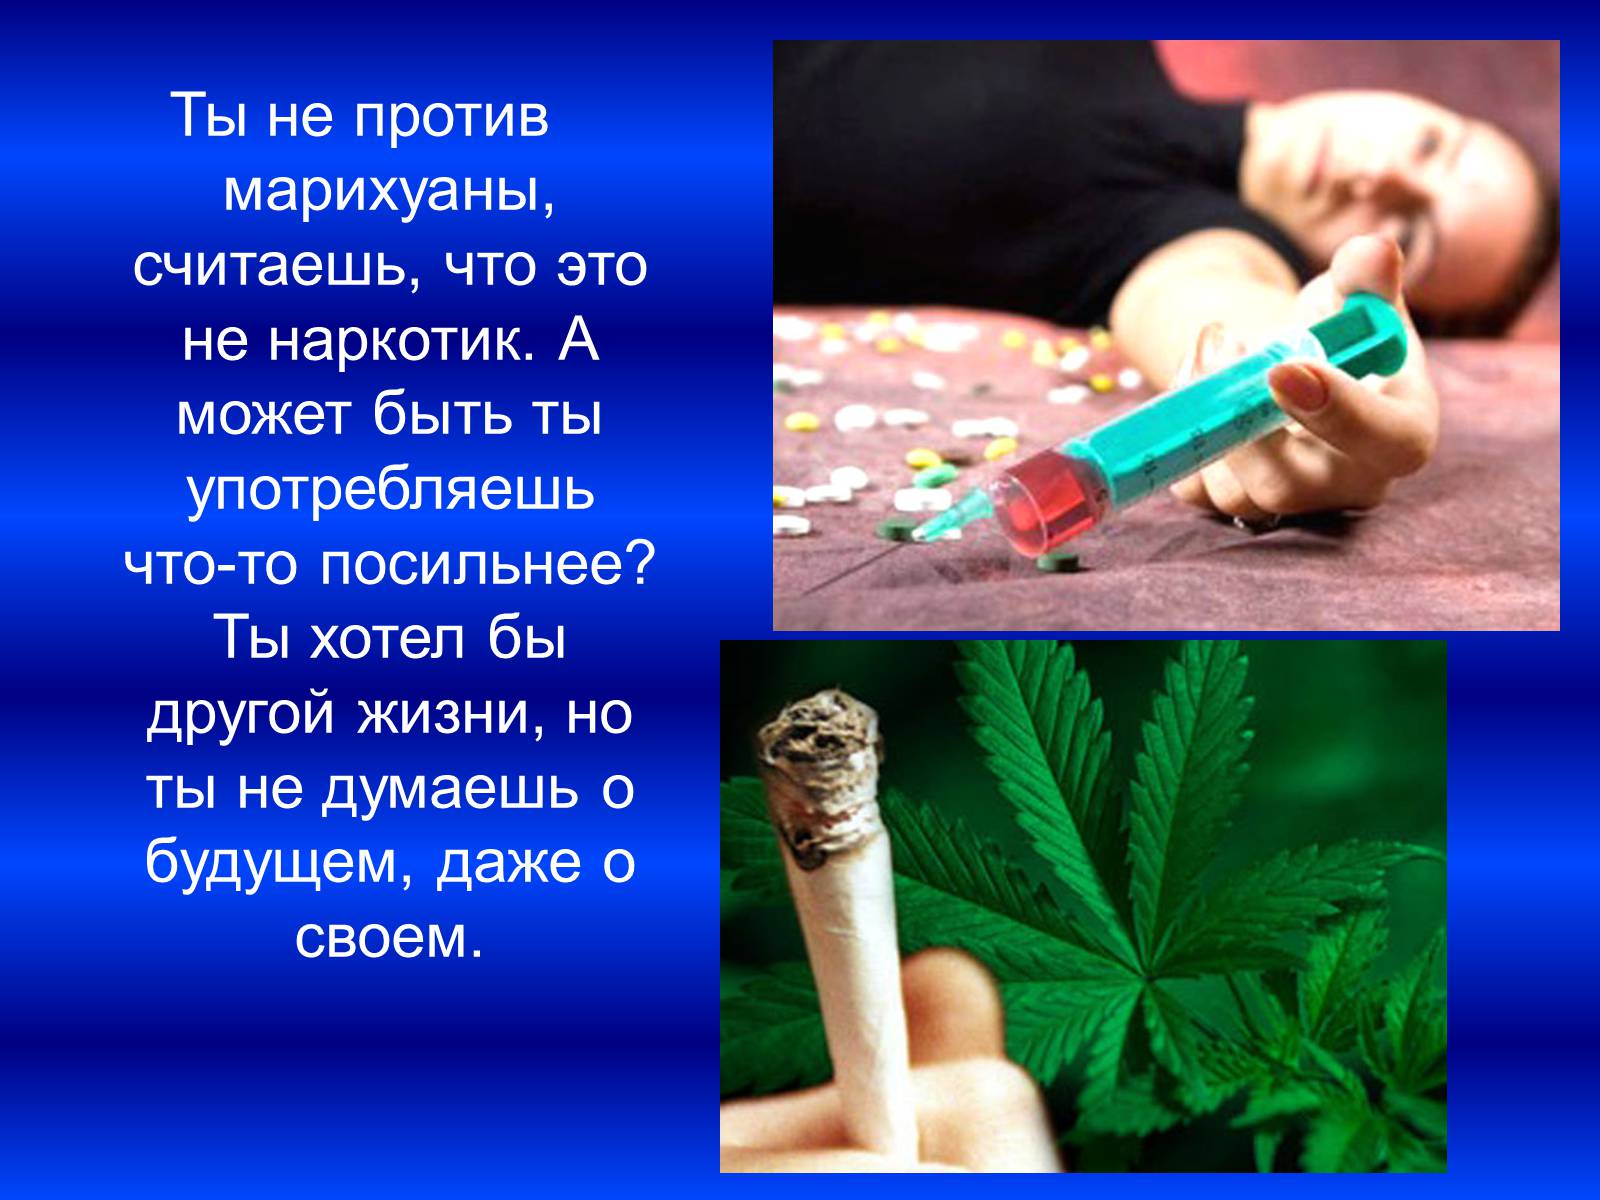 Реклама против марихуаны фенамин наркотик или нет